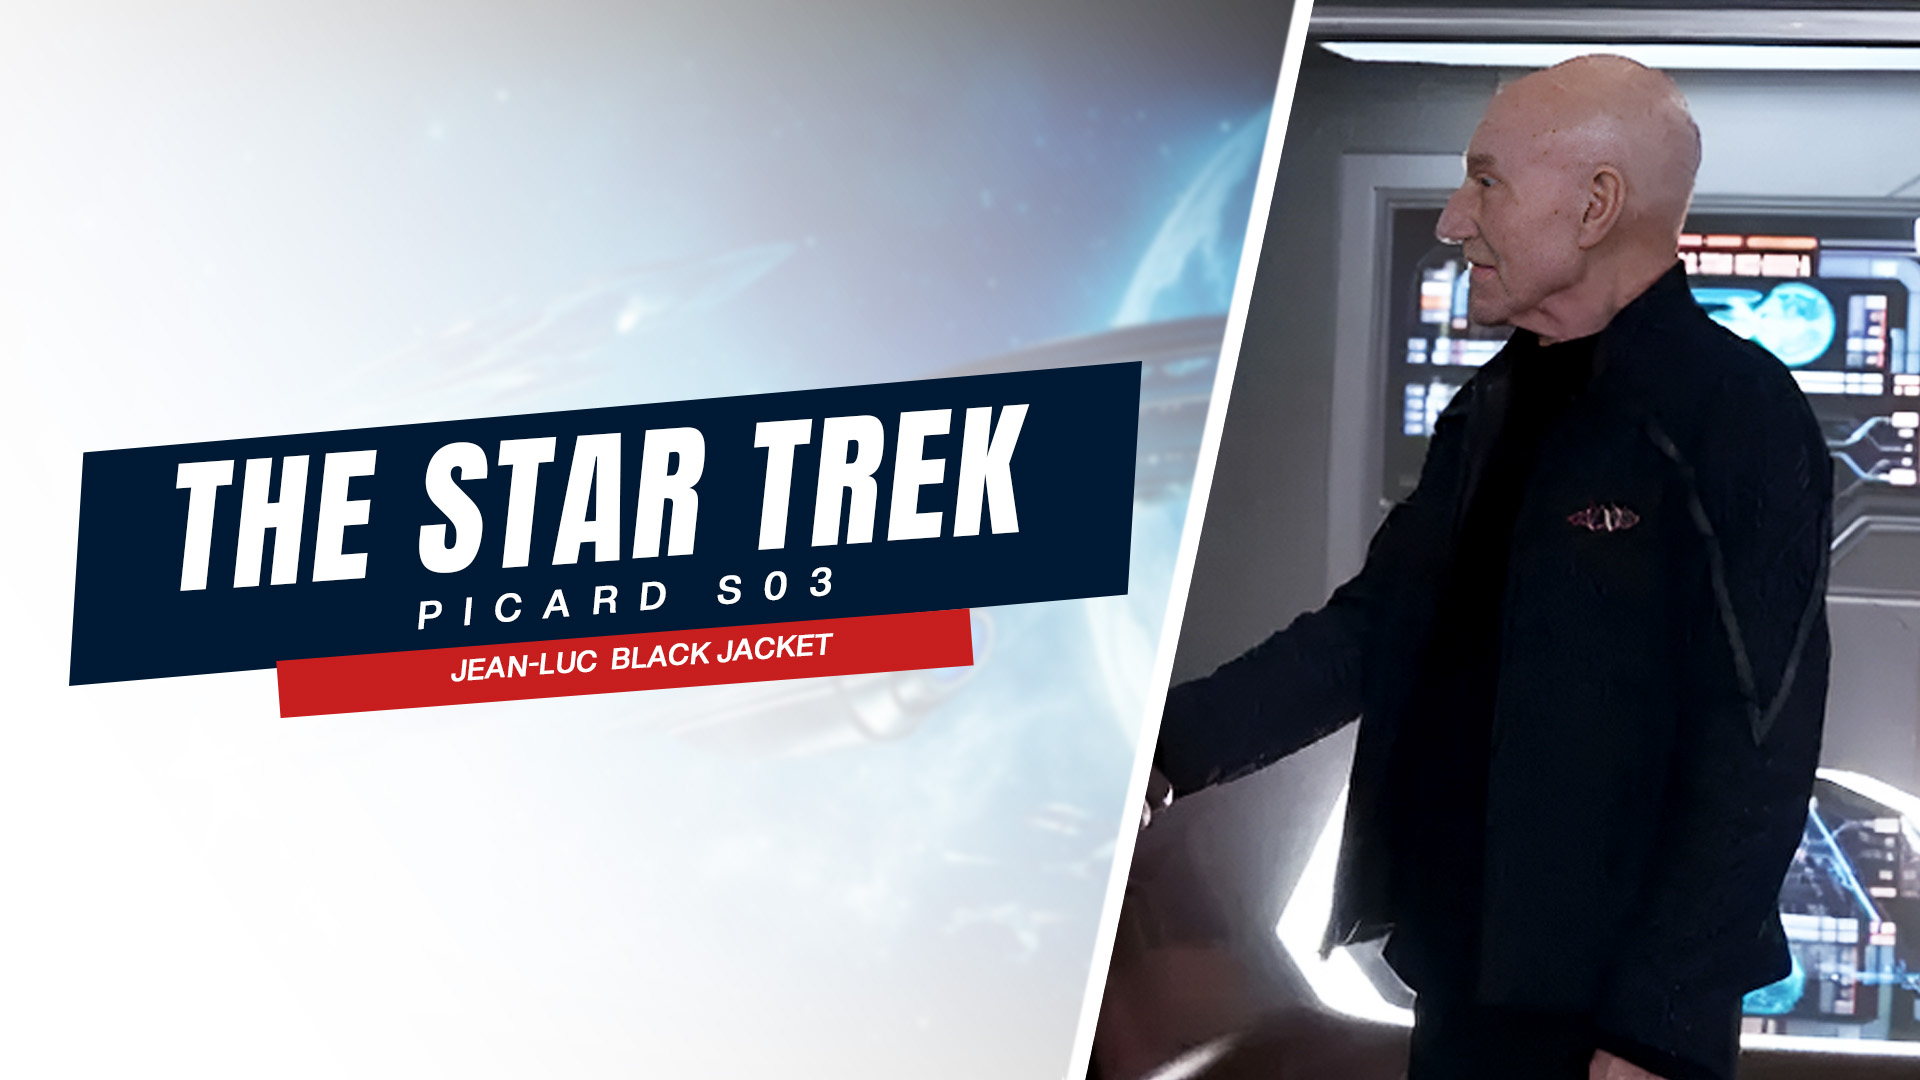 Jean-Luc Picard Star Trek Picard S03 Black Jacket0